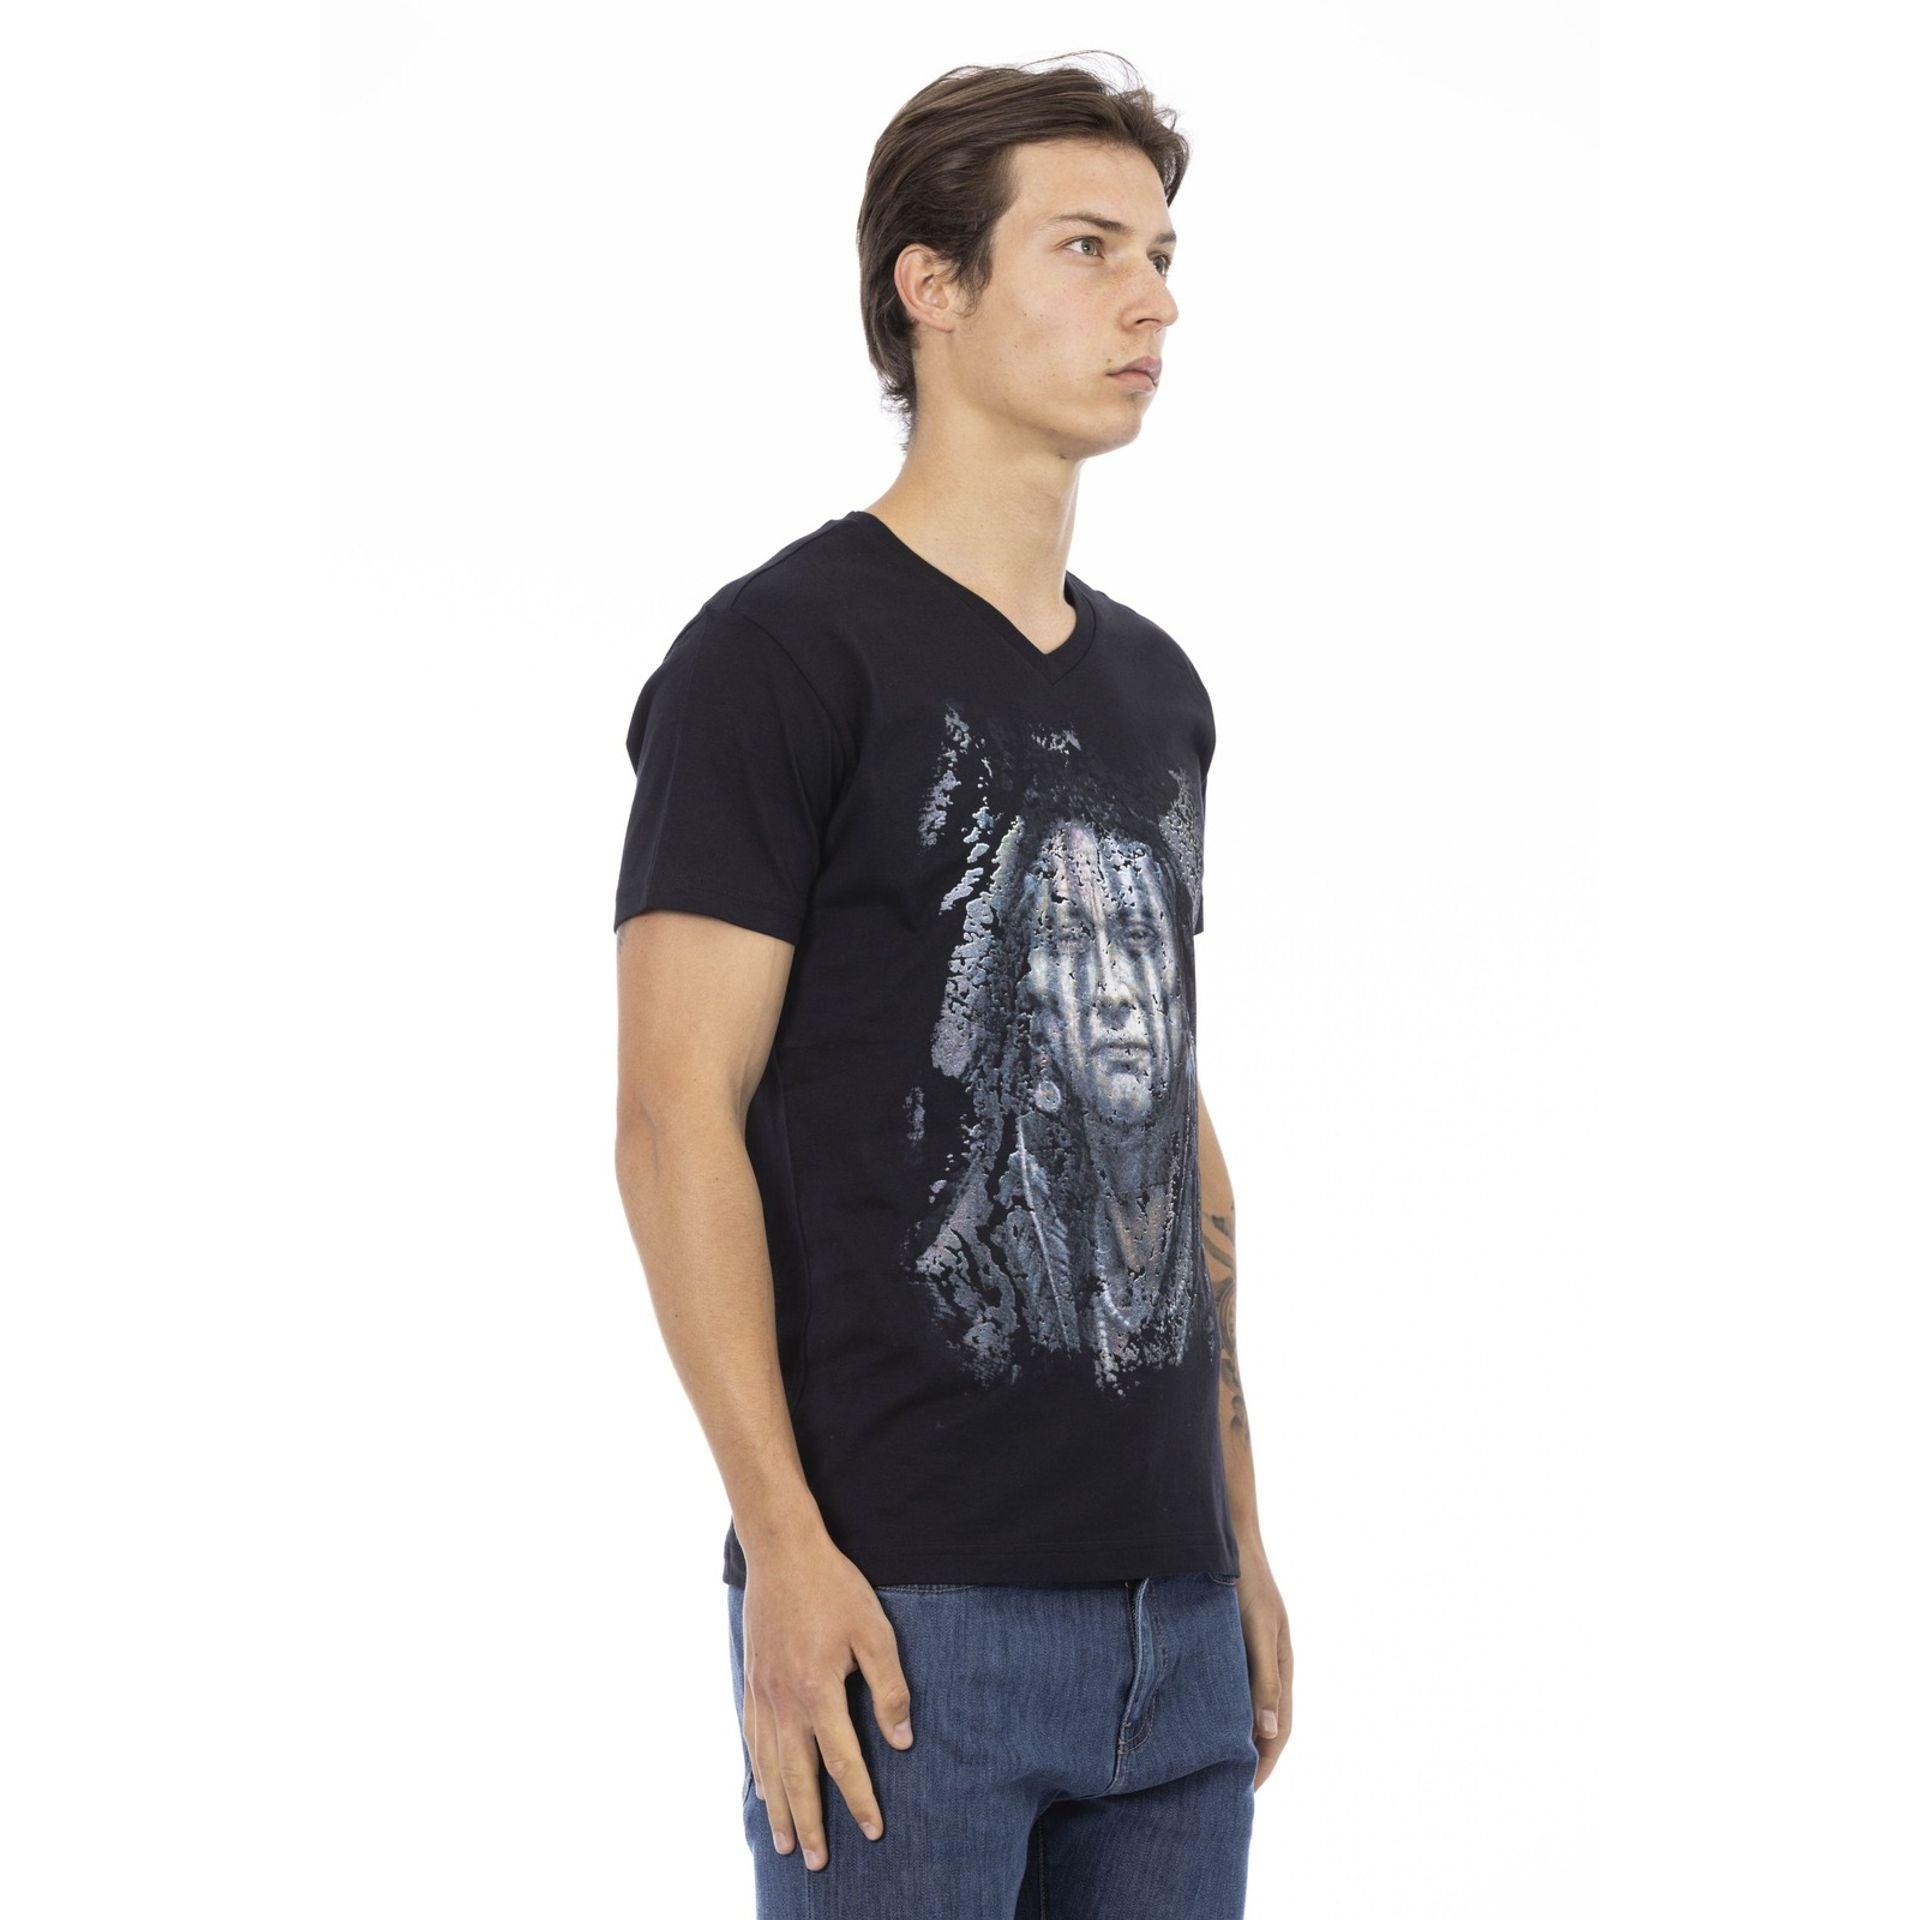 Trussardi Action Men T-shirts - Black Brand T-shirts - T-Shirt - Guocali